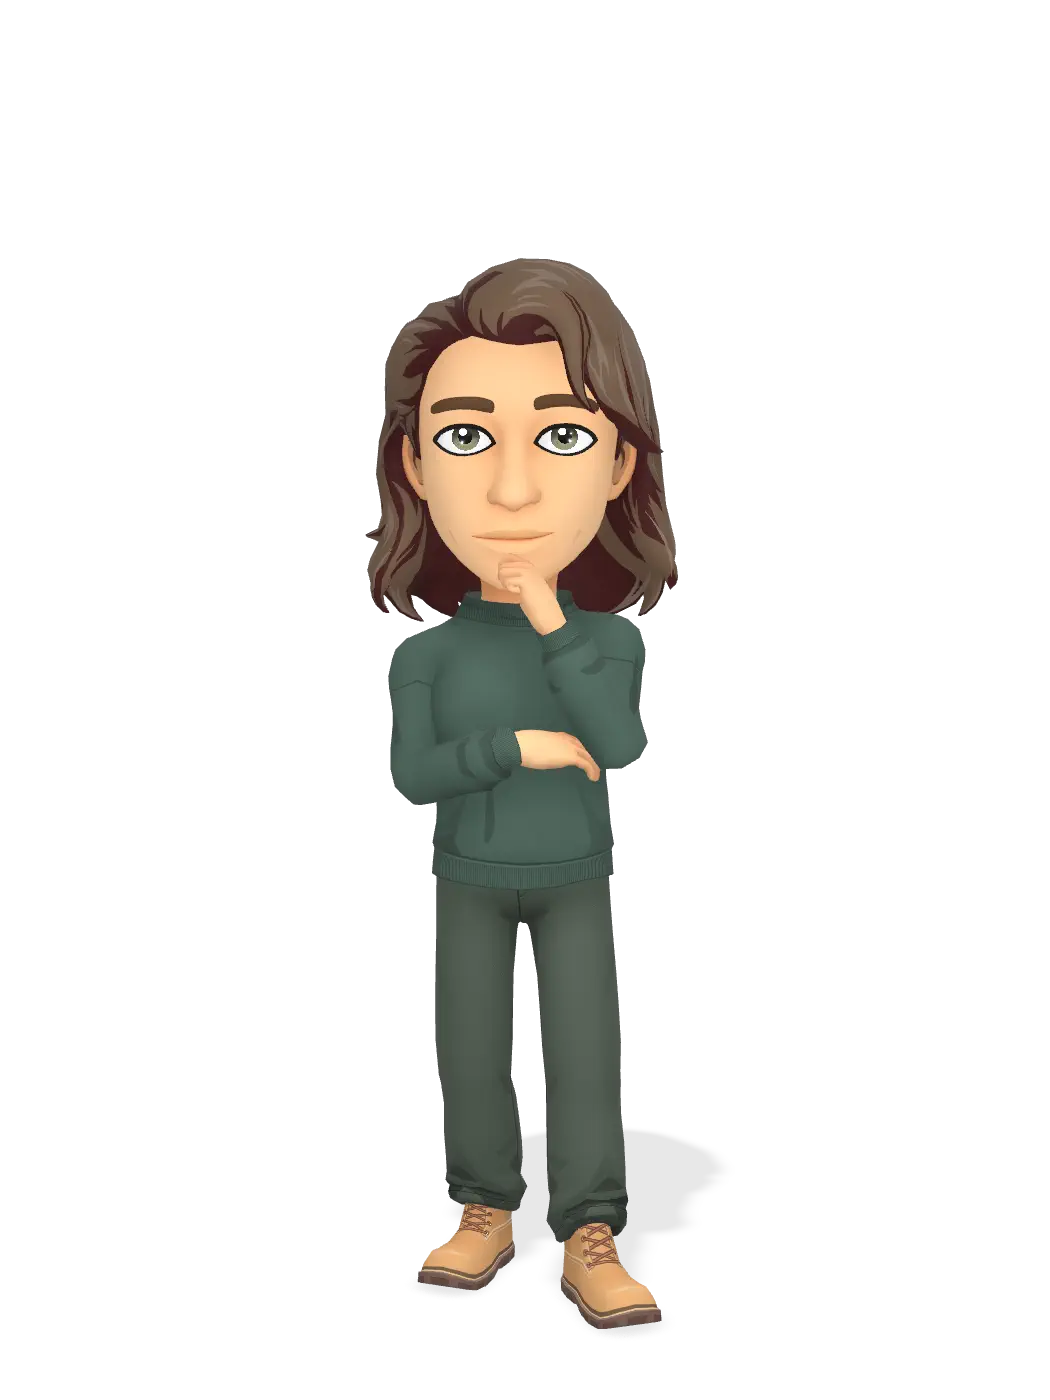 3D Bitmoji for jacobmarciniec avatar